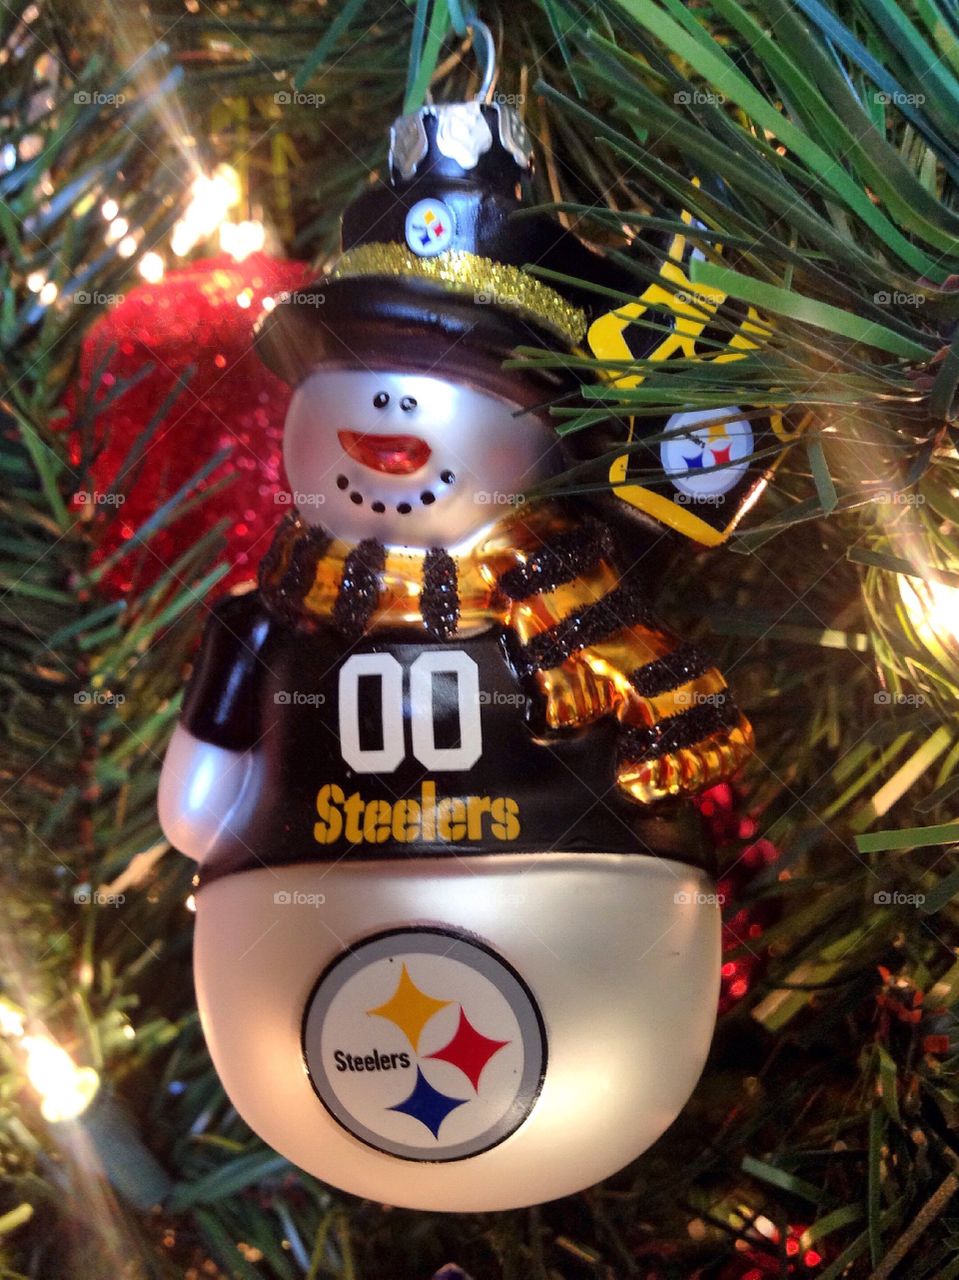 Here We Go Steelers! Merry Christmas! 